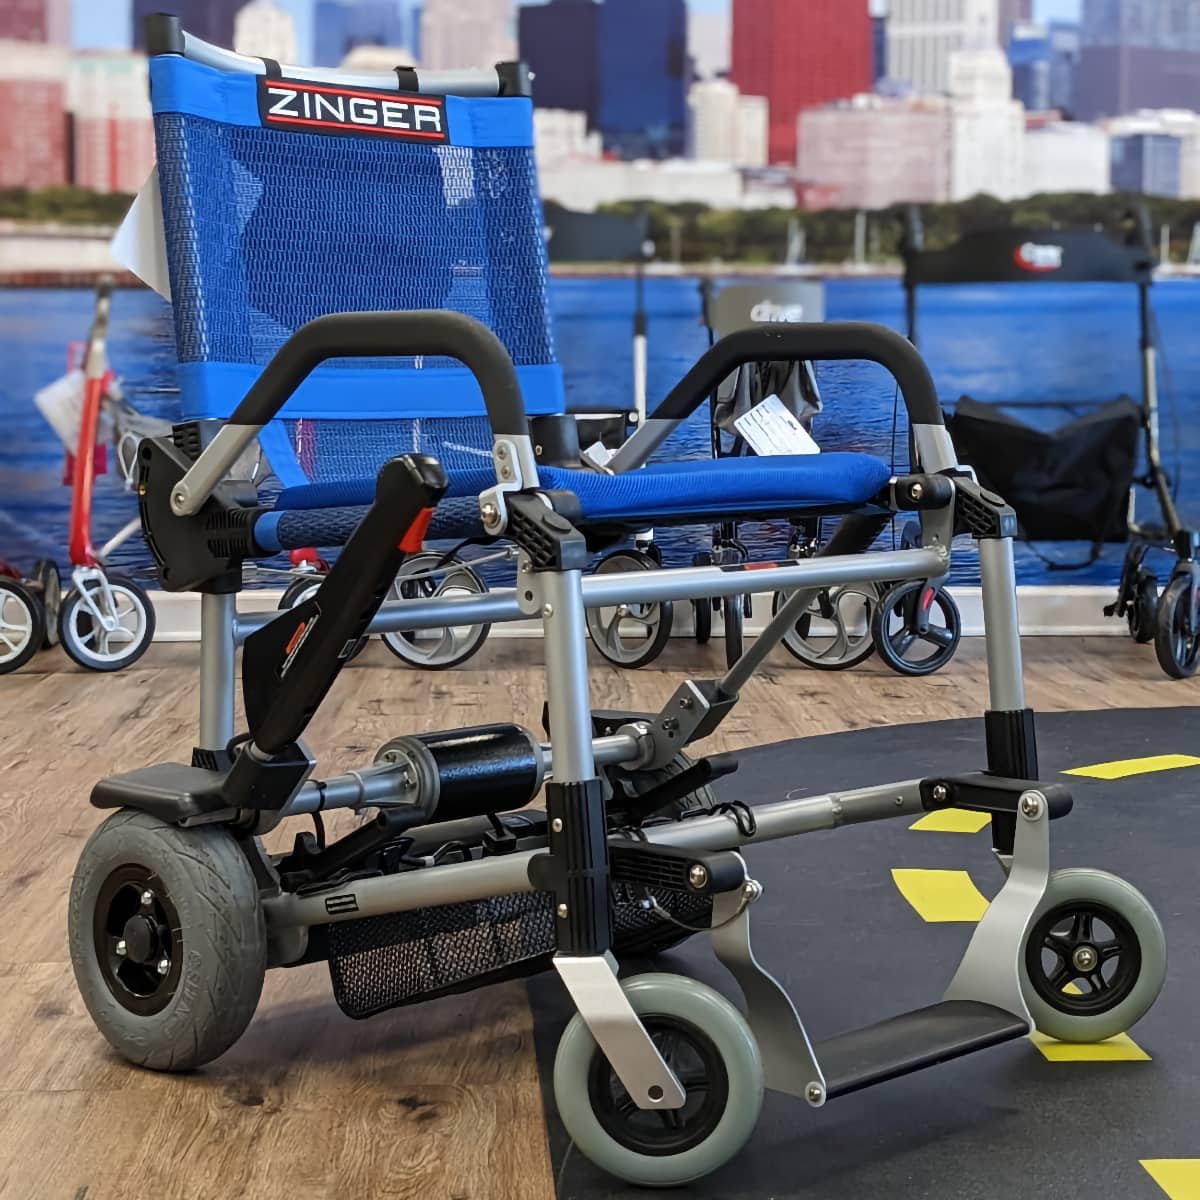 Zinger power wheelchair in blue